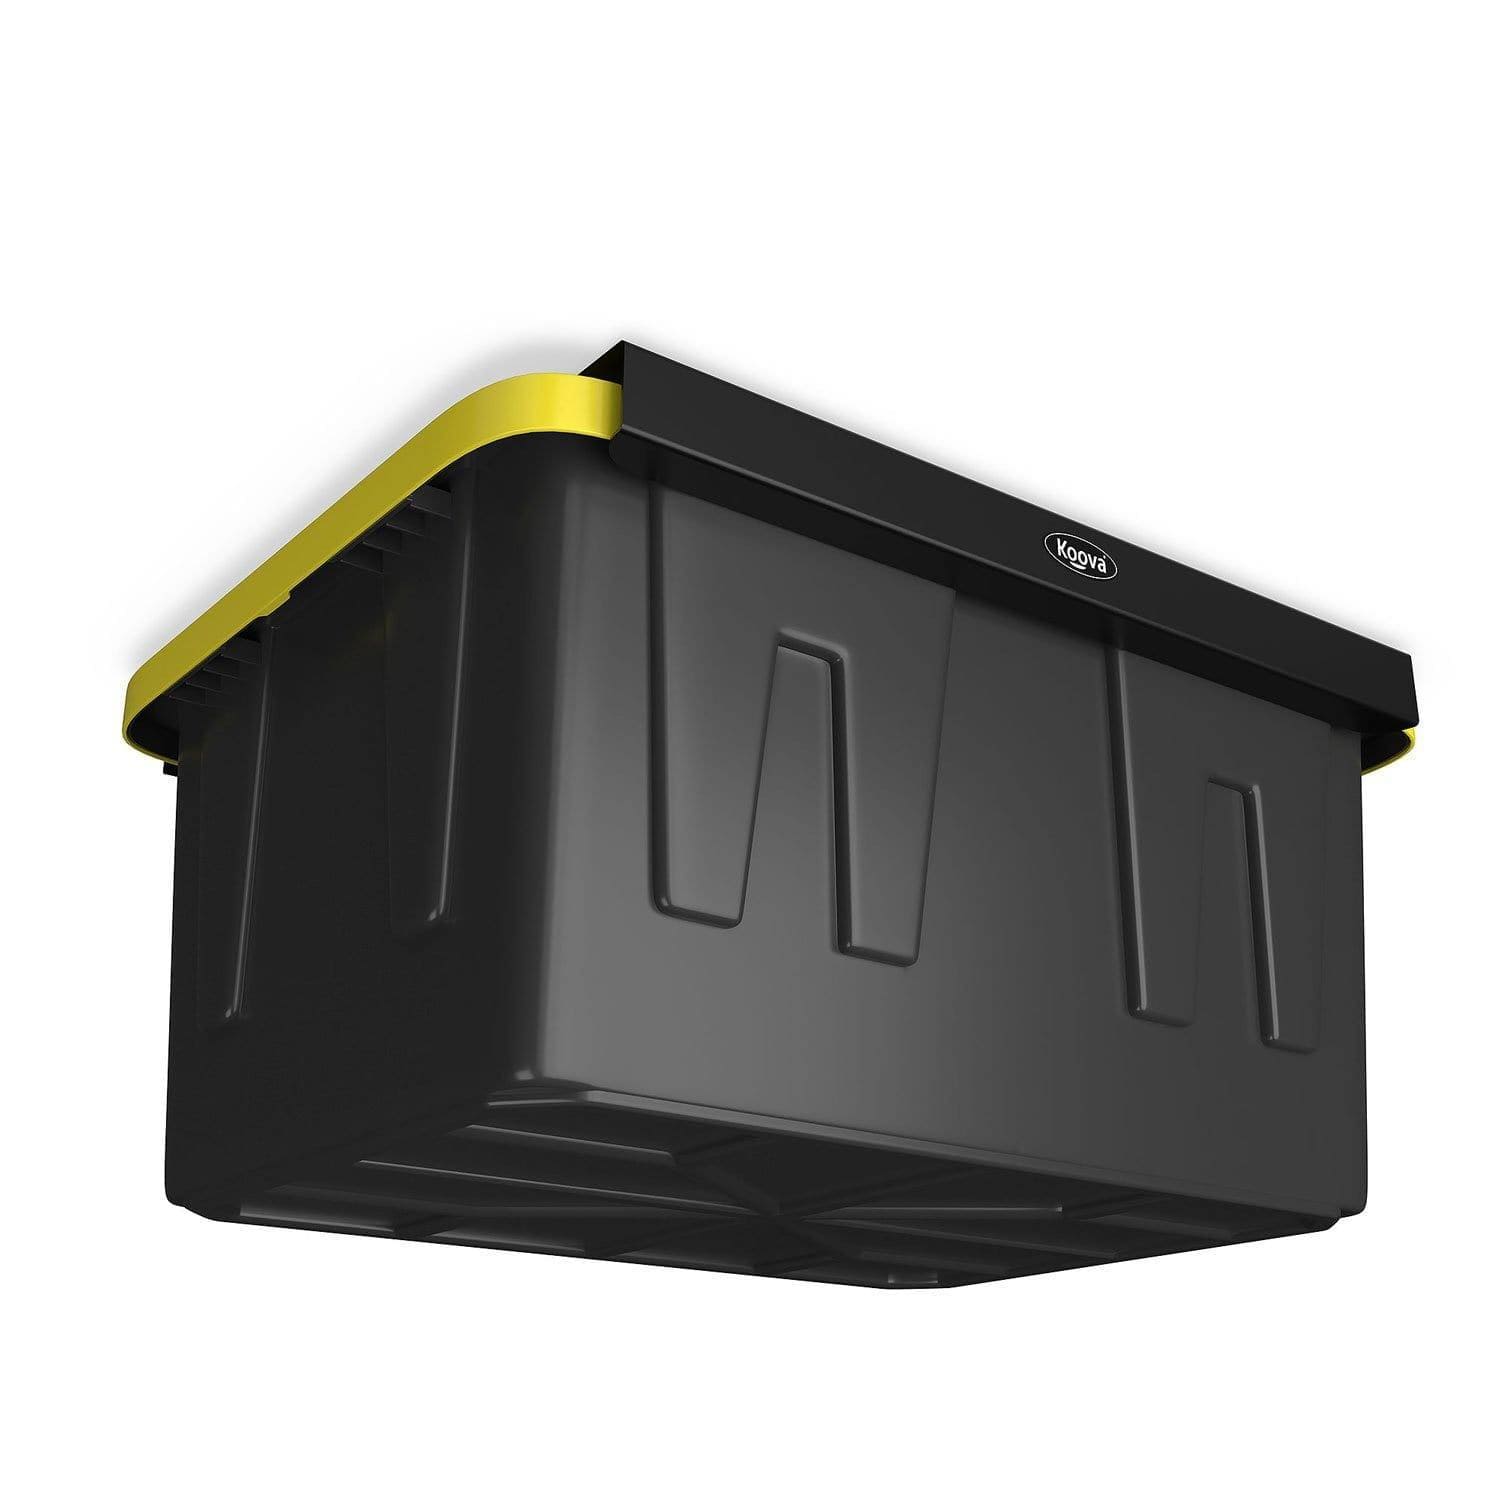 Koova Wall Mount Garage Tote Rack Storage System (3-Piece Set), Black